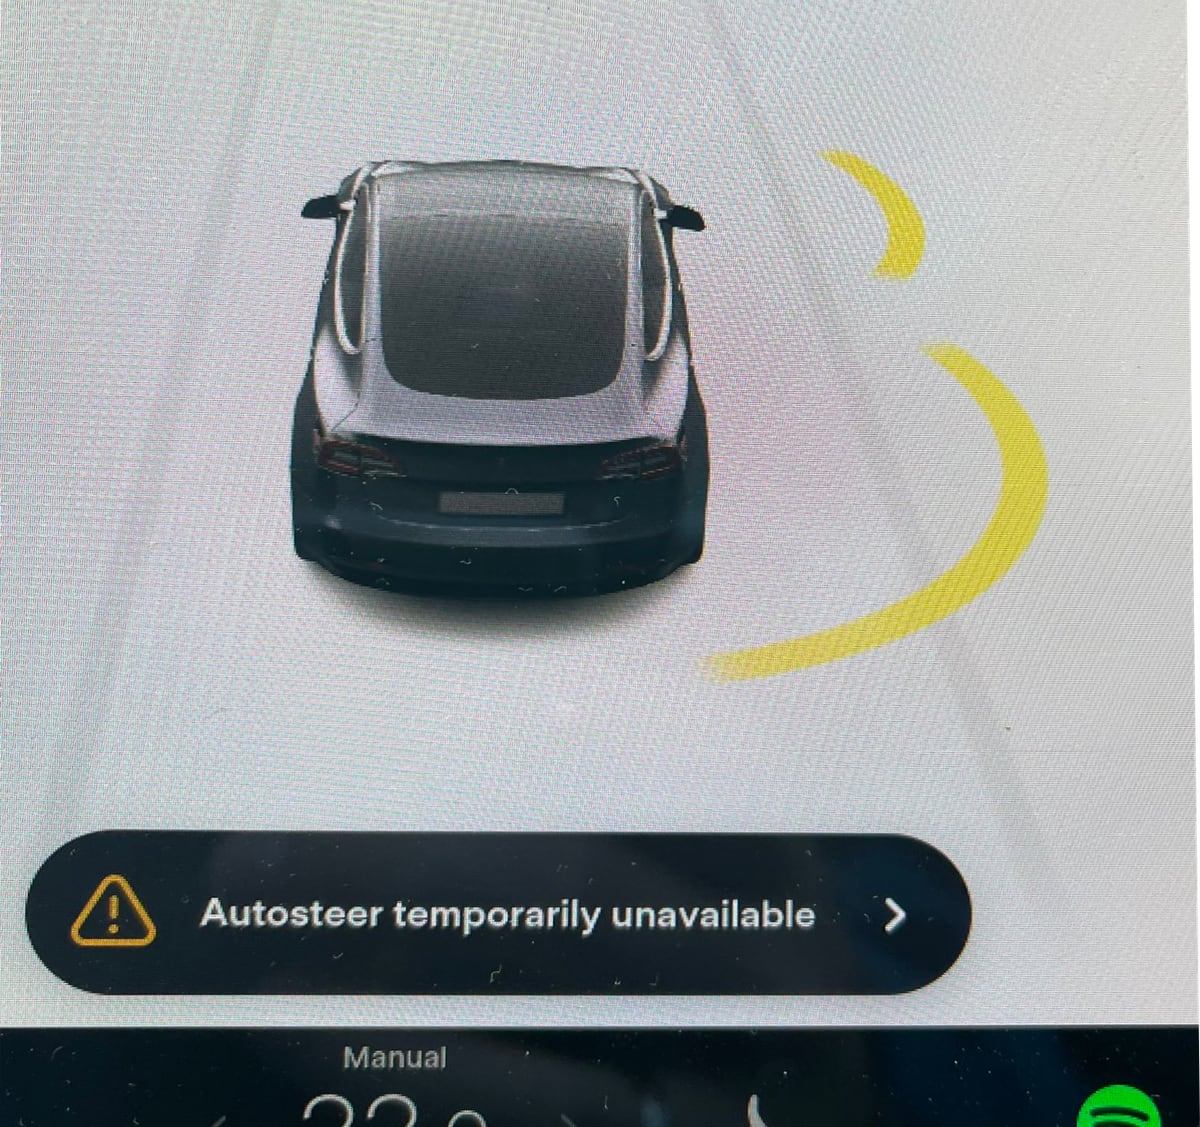 Tesla Vehicle Alerts feature in update 2022.36.20